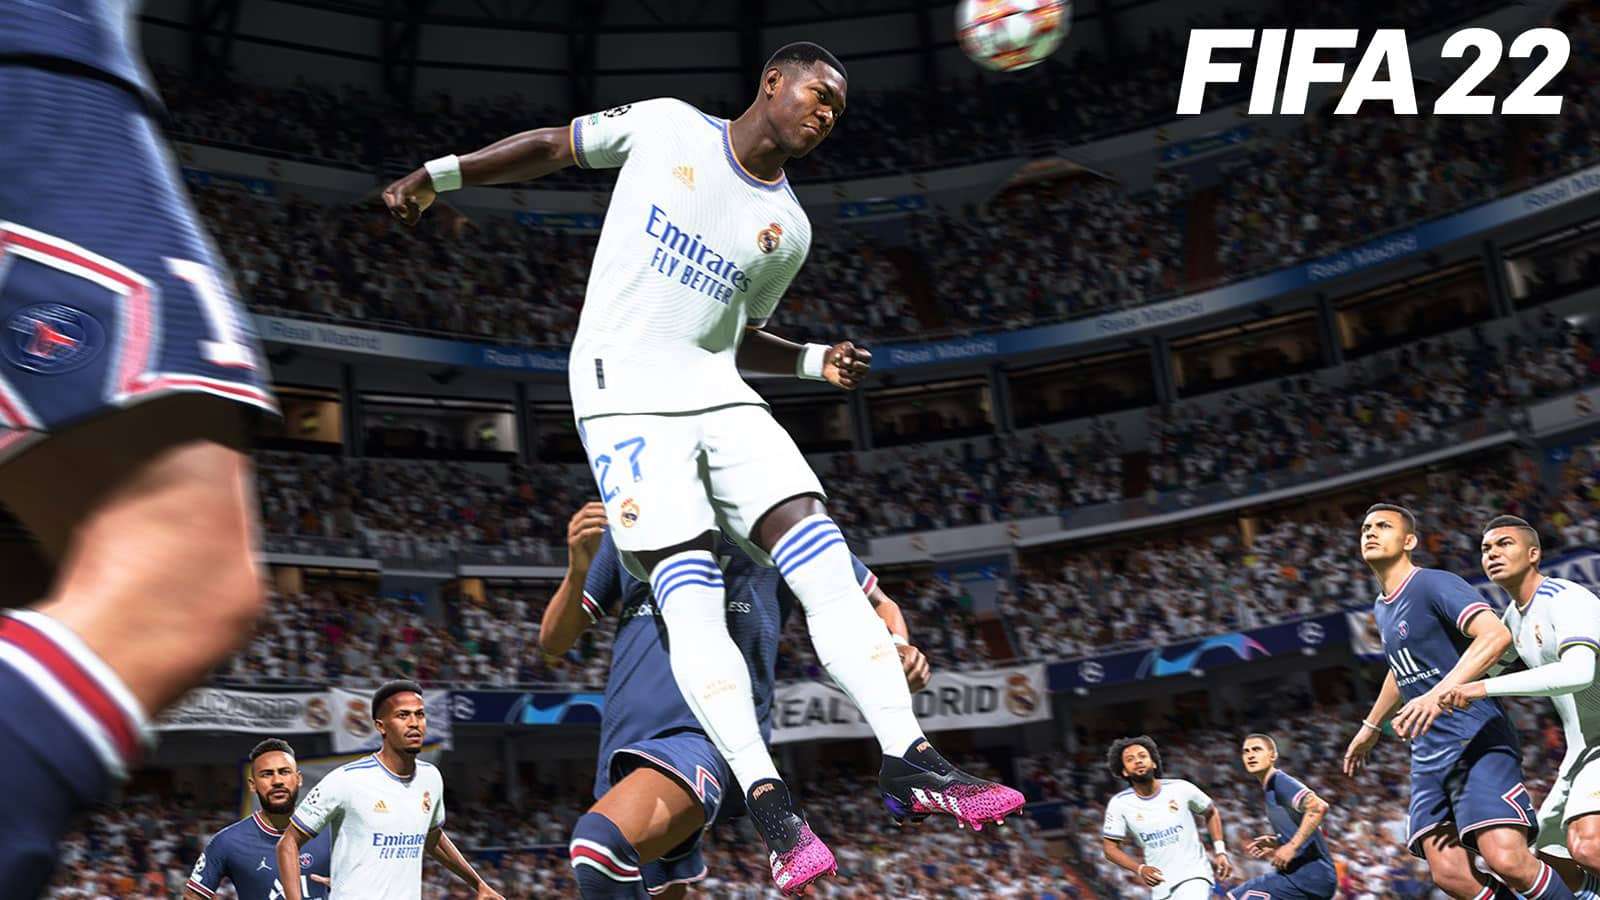 FIFA 22 screenshot showing a player heading the ball